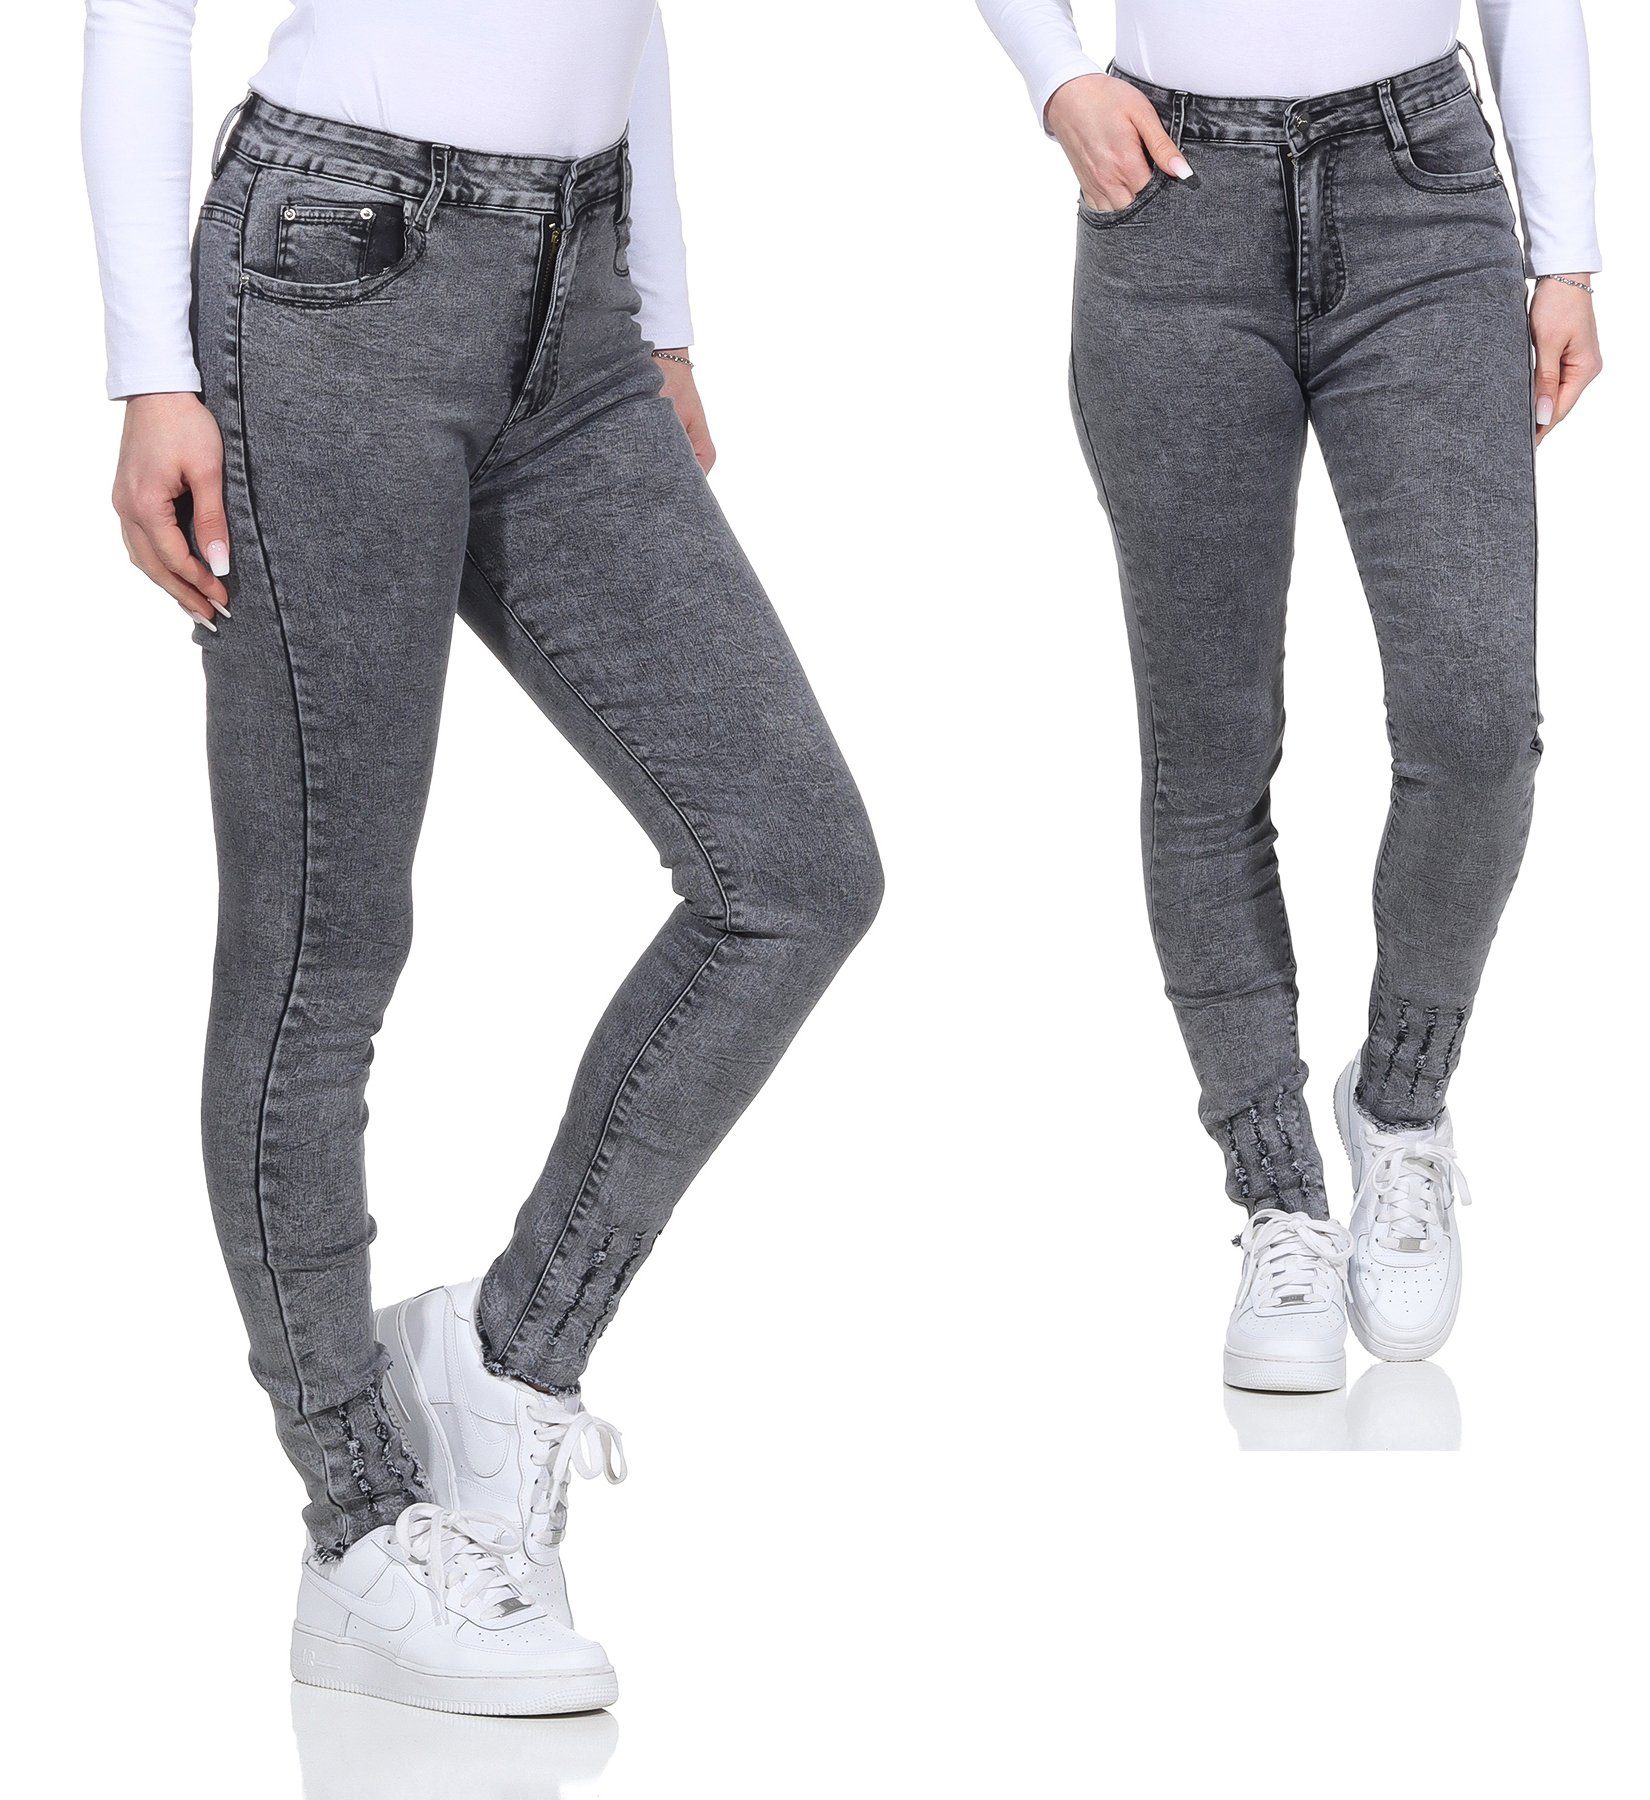 Aurela Damenmode 5-Pocket-Jeans Jeanshosen für Look Grau Stretch Damen Look Distressed Jeans moderner Destroyed